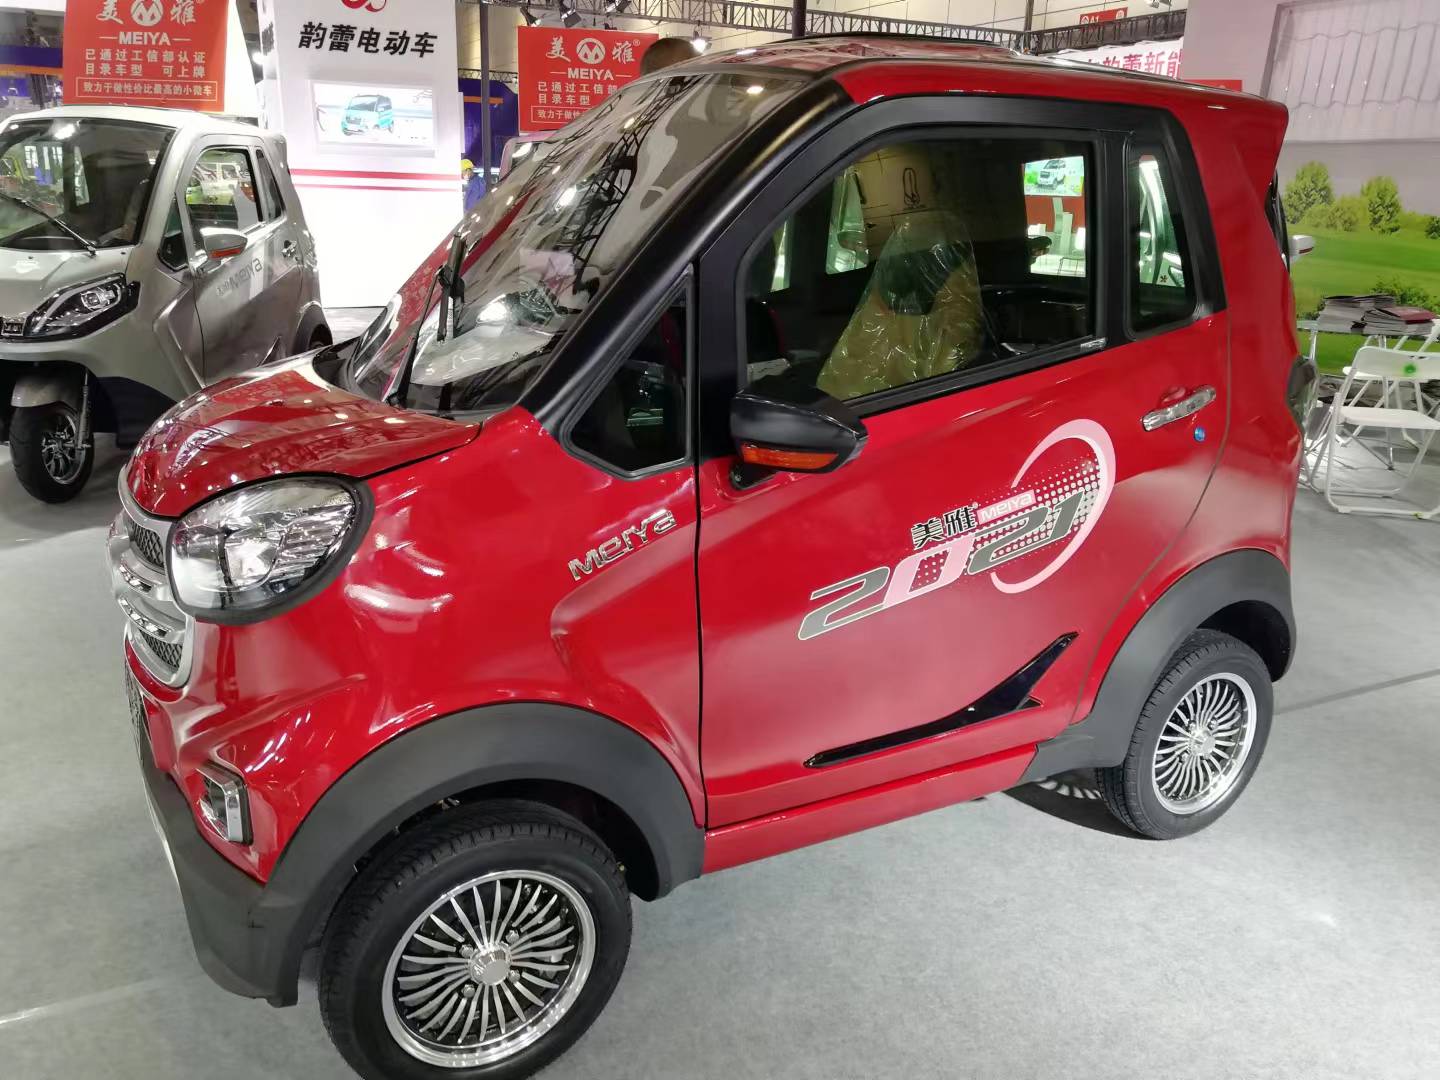 MEIYA 520 EV New Modes 4 Wheels Cargo 3 passenger Made in China Factory